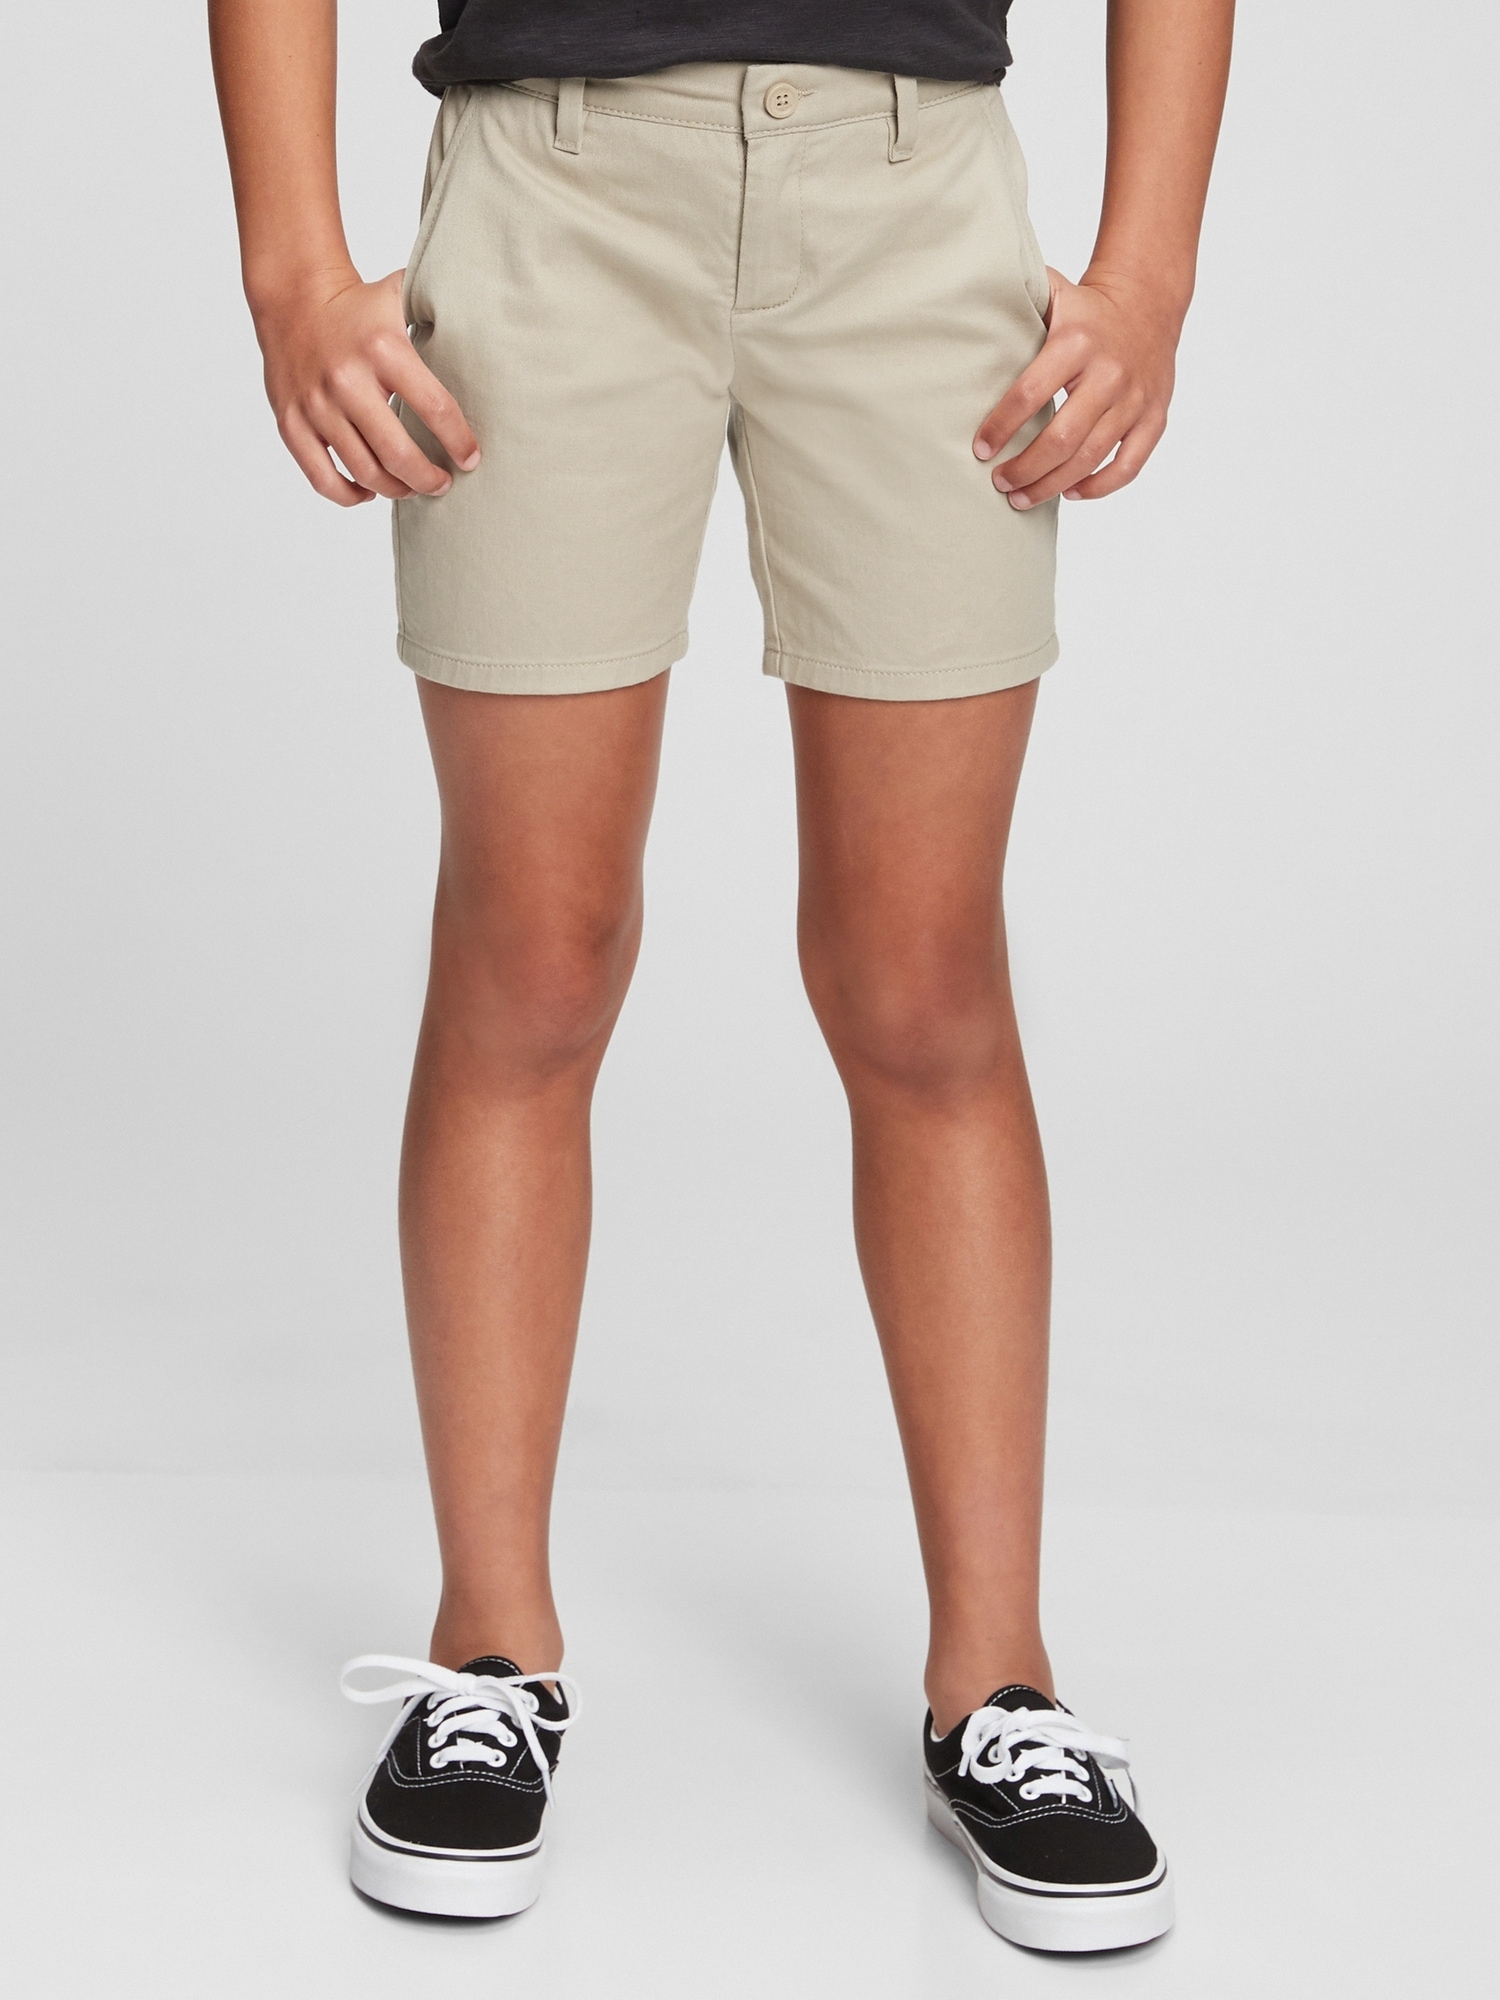 Kids Uniform Midi Shorts | Gap